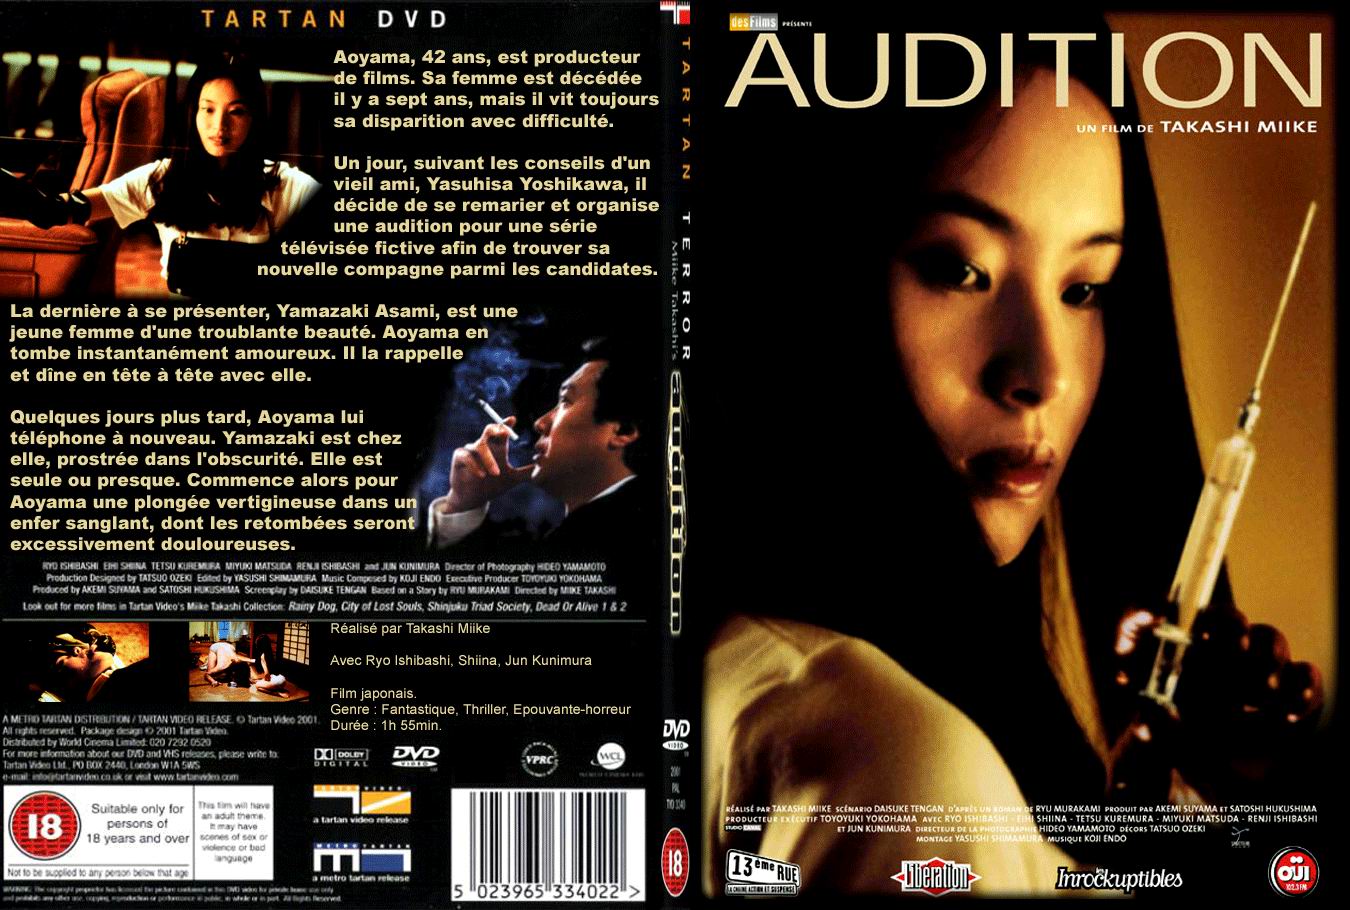 Jaquette DVD Audition - SLIM